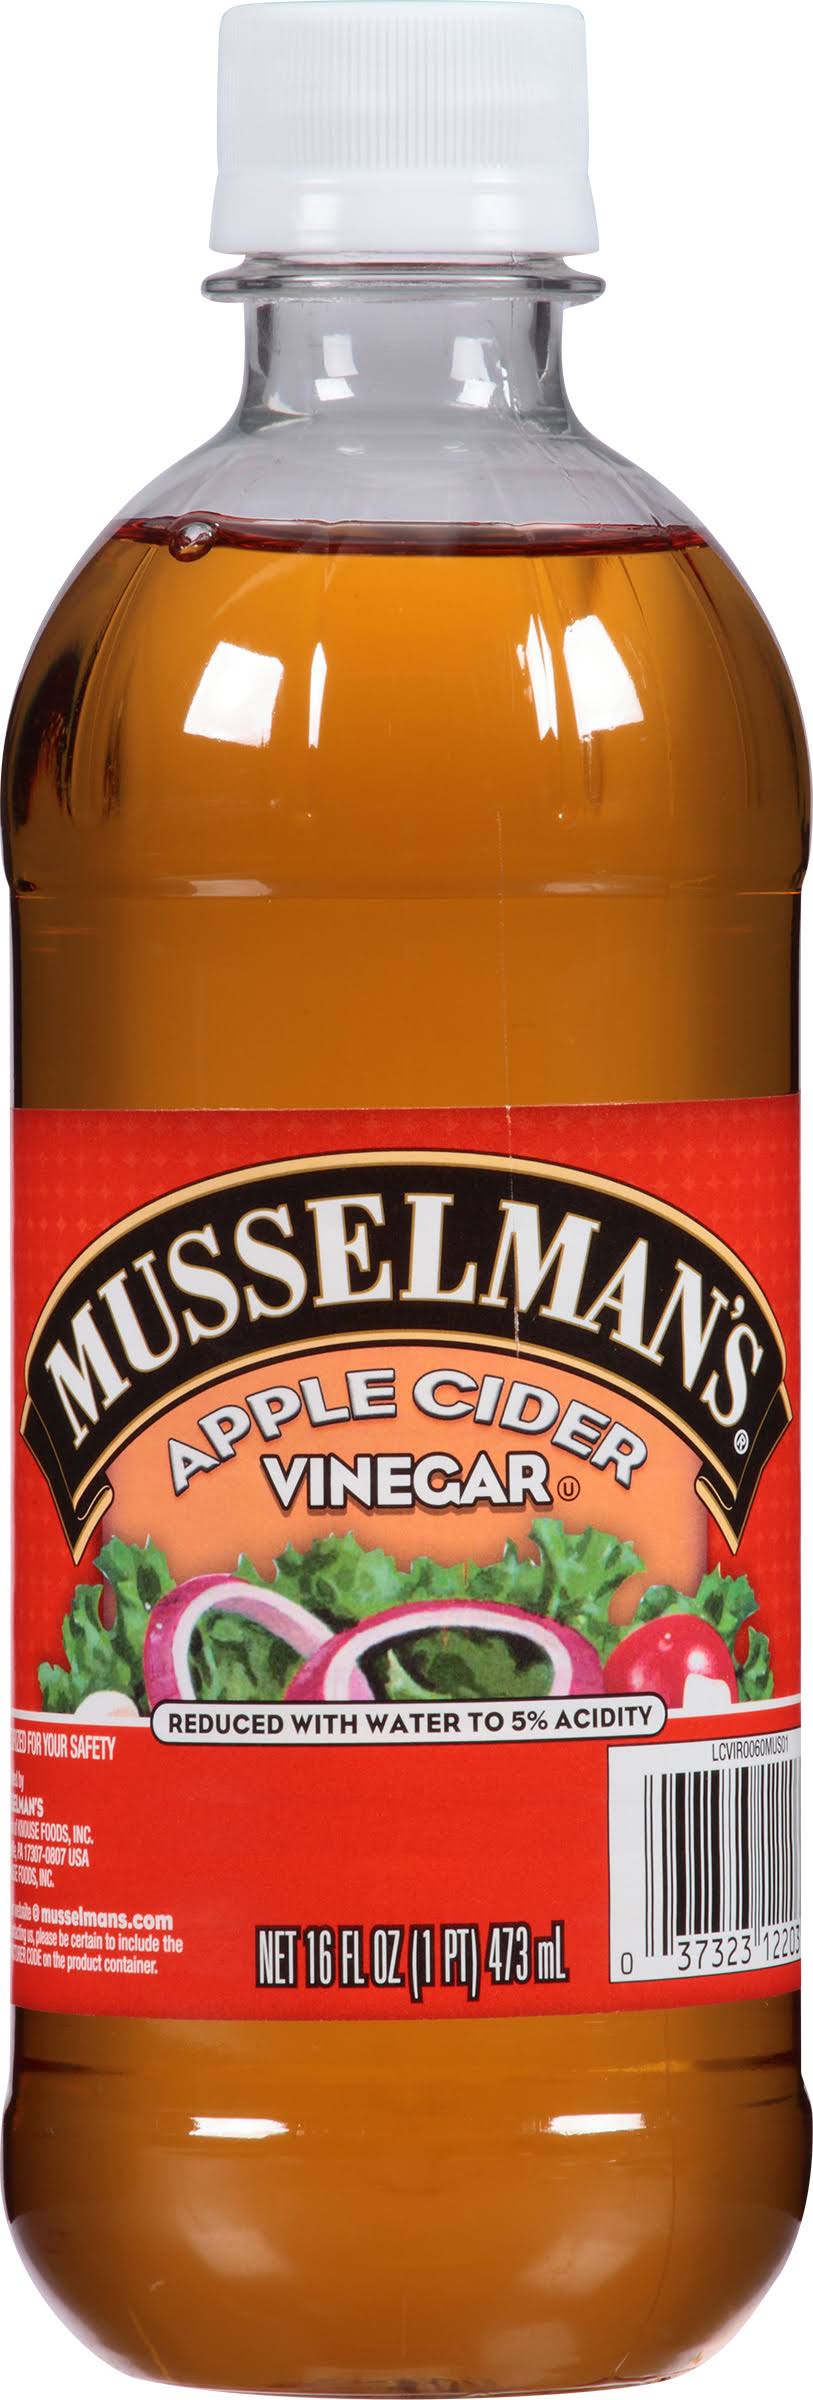 Musselman's Apple Cider Vinegar - 16oz